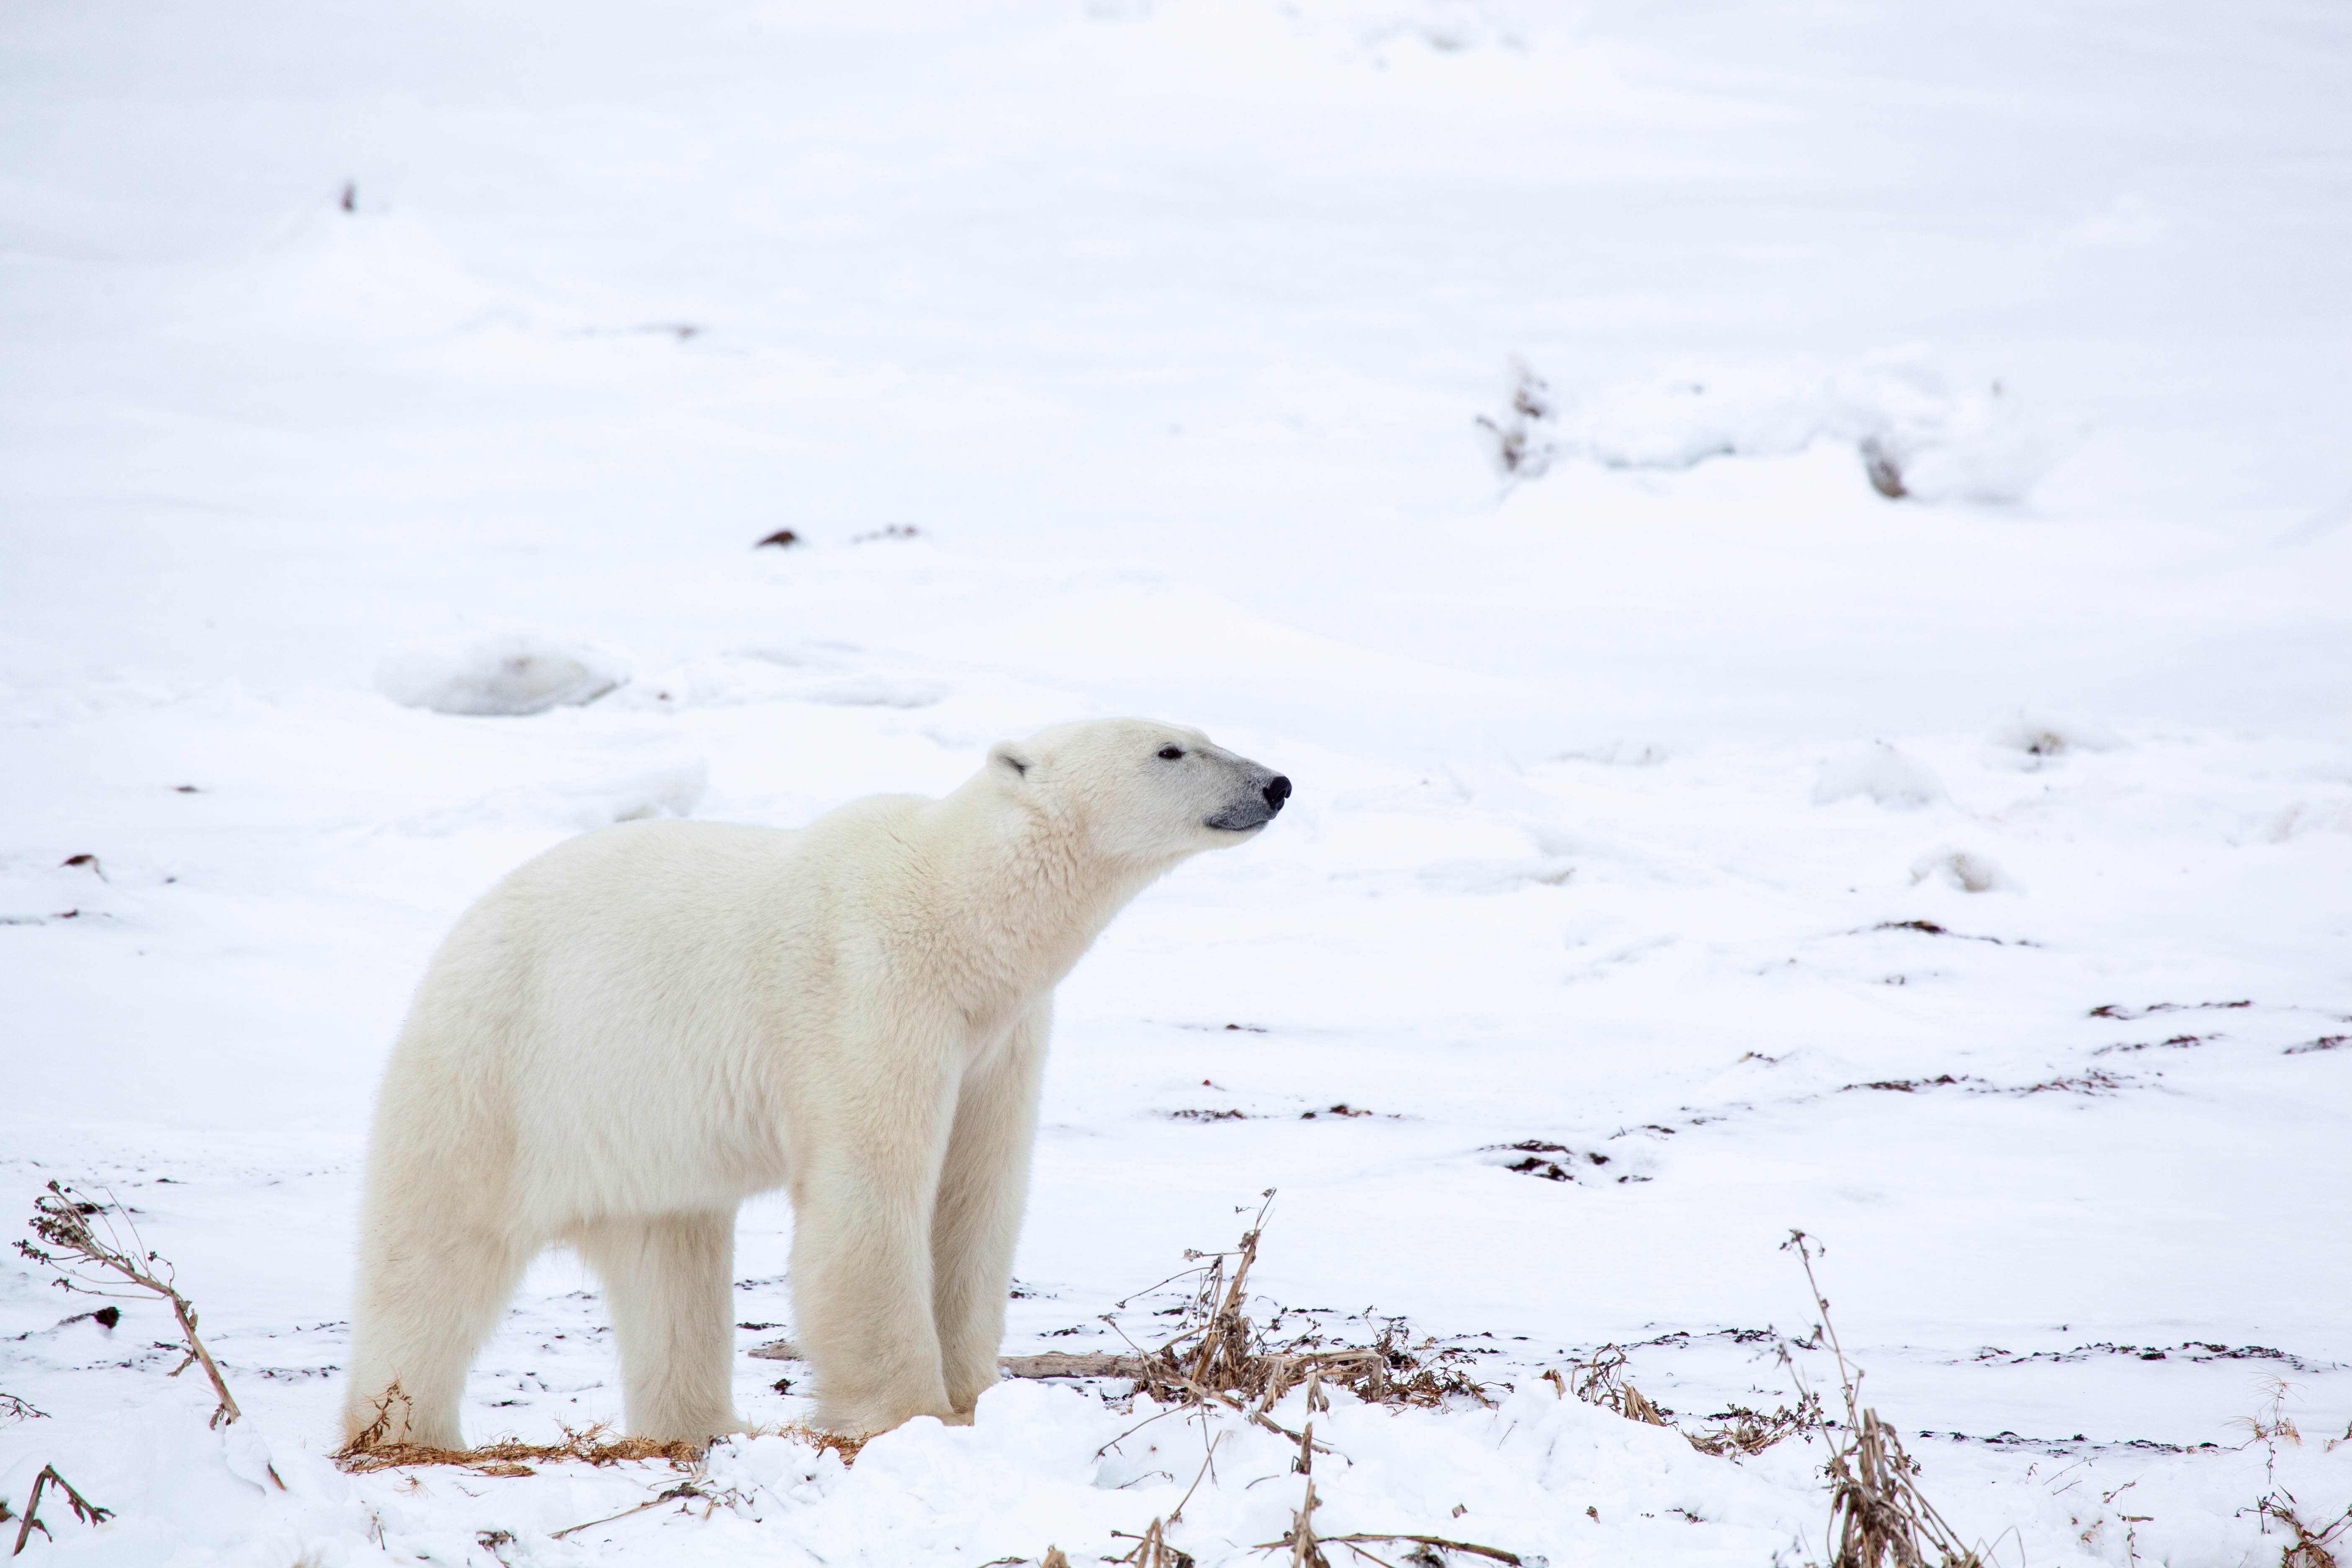 A polar bear in Churchill standing in the snow